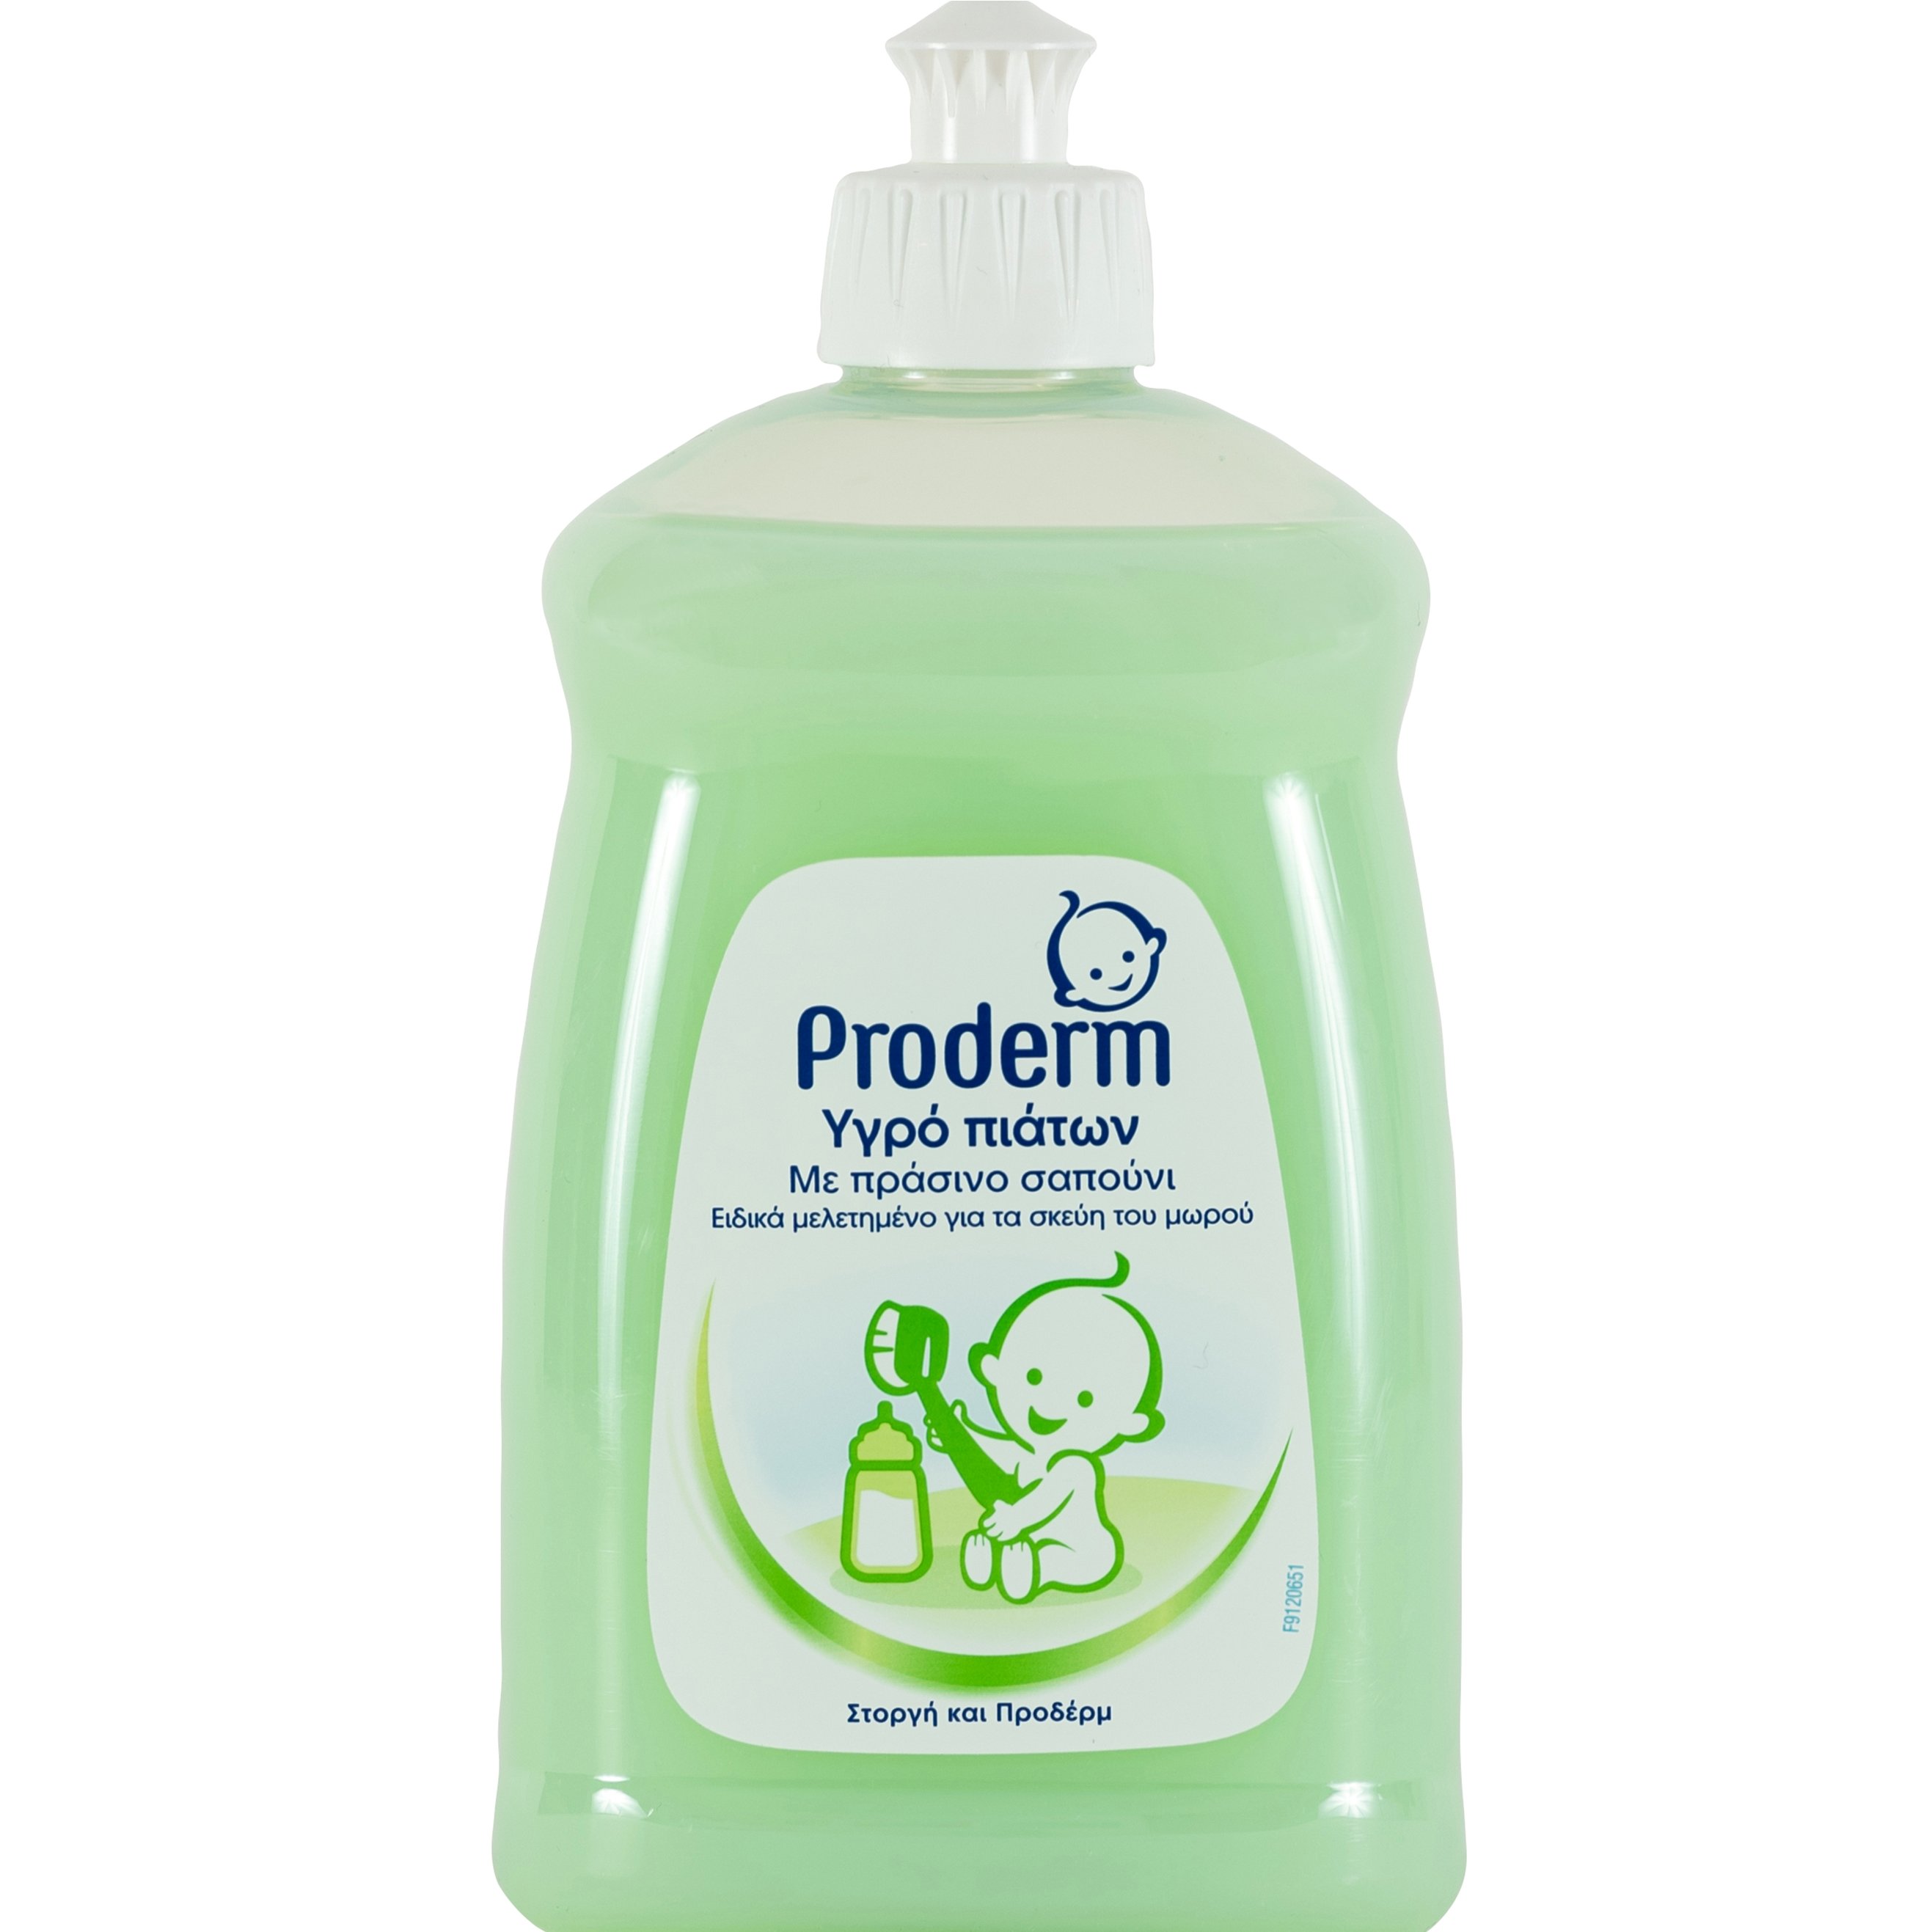 Proderm Proderm Υγρό Πιάτων με Πράσινο Σαπούνι Ειδικά Μελετημένο για τα Ευαίσθητα Σκεύη του Μωρού 500ml